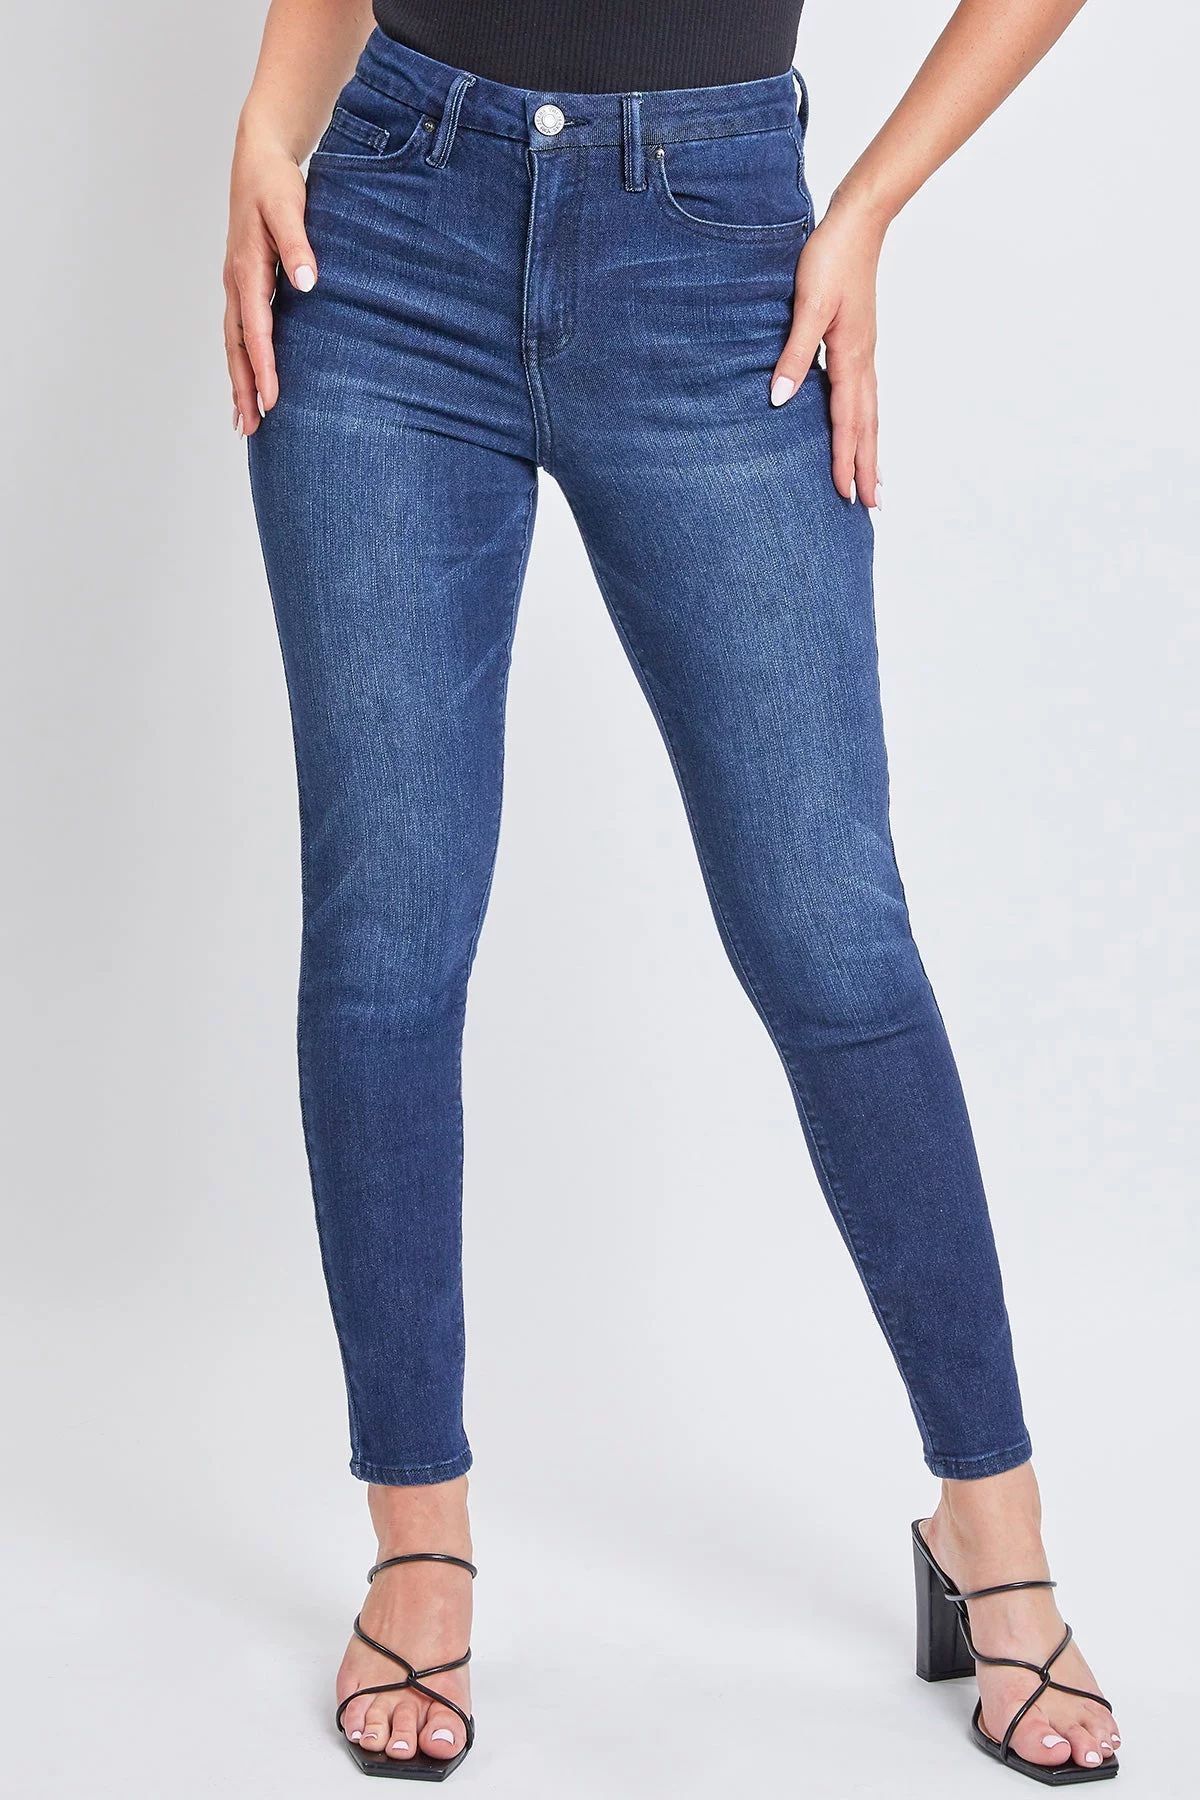 YMI Women’s High Rise Curvy Fit Skinny Jean | Walmart (US)